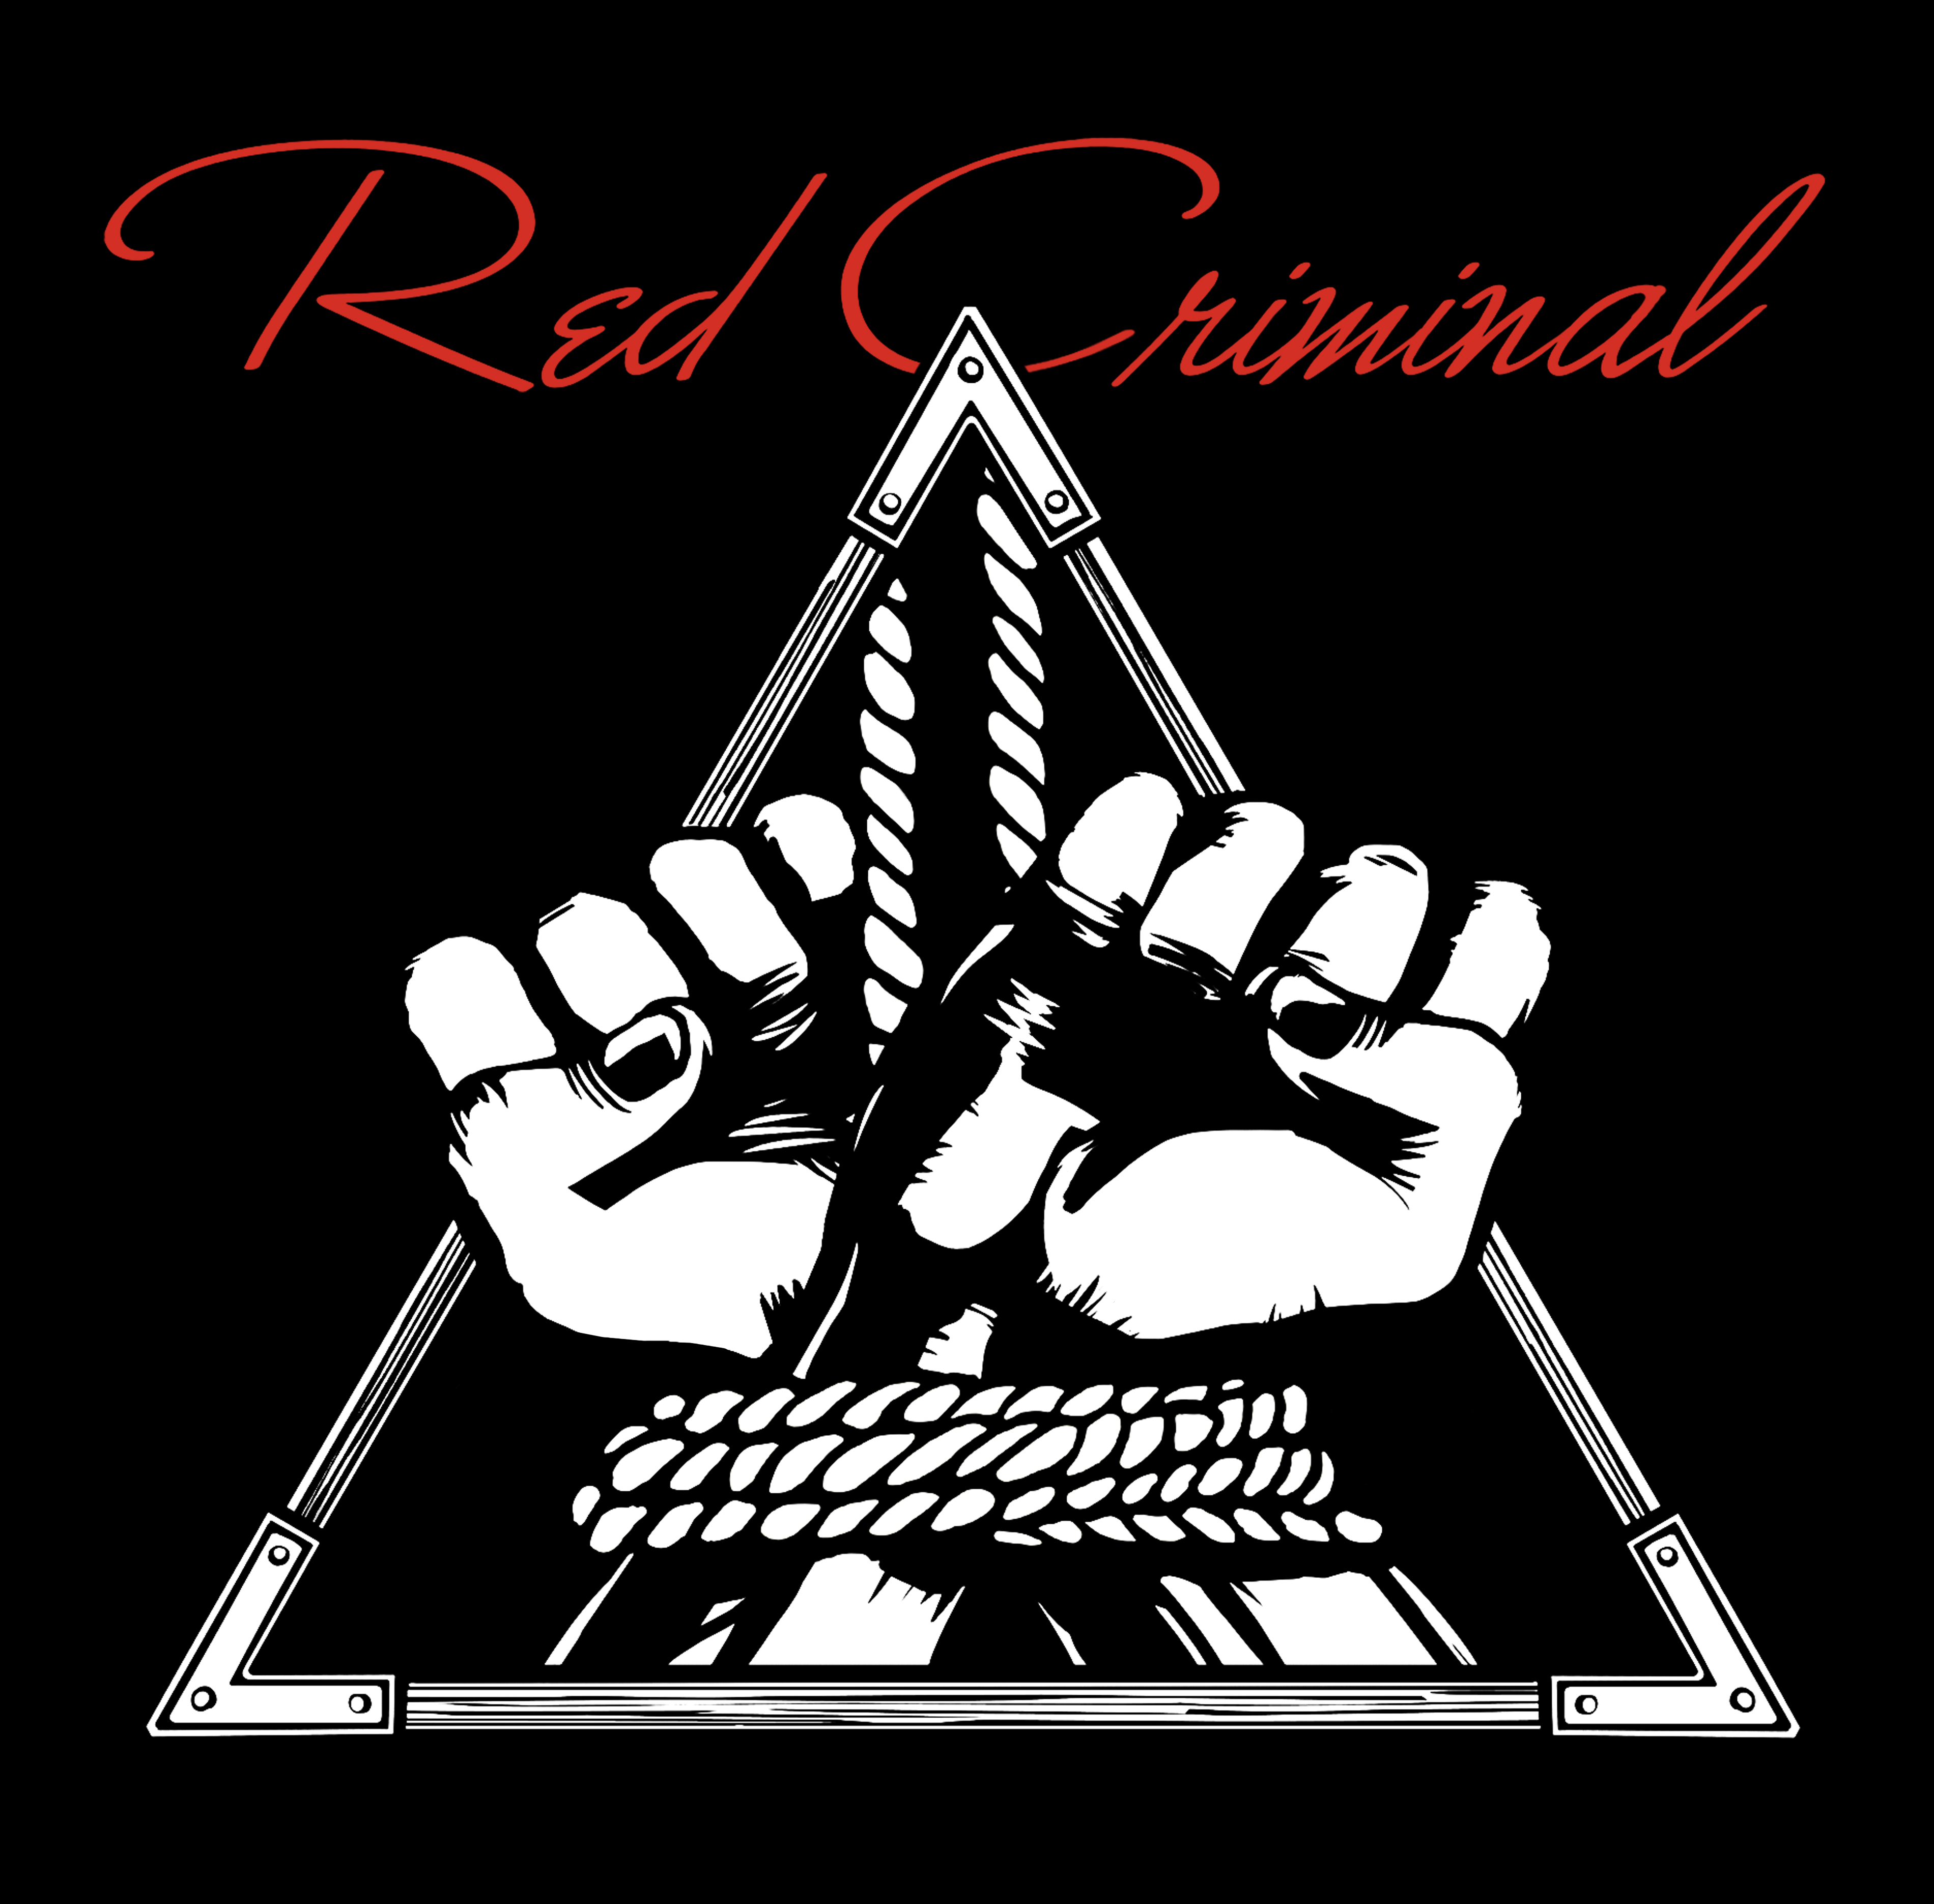 「Red Criminal」ジャケット